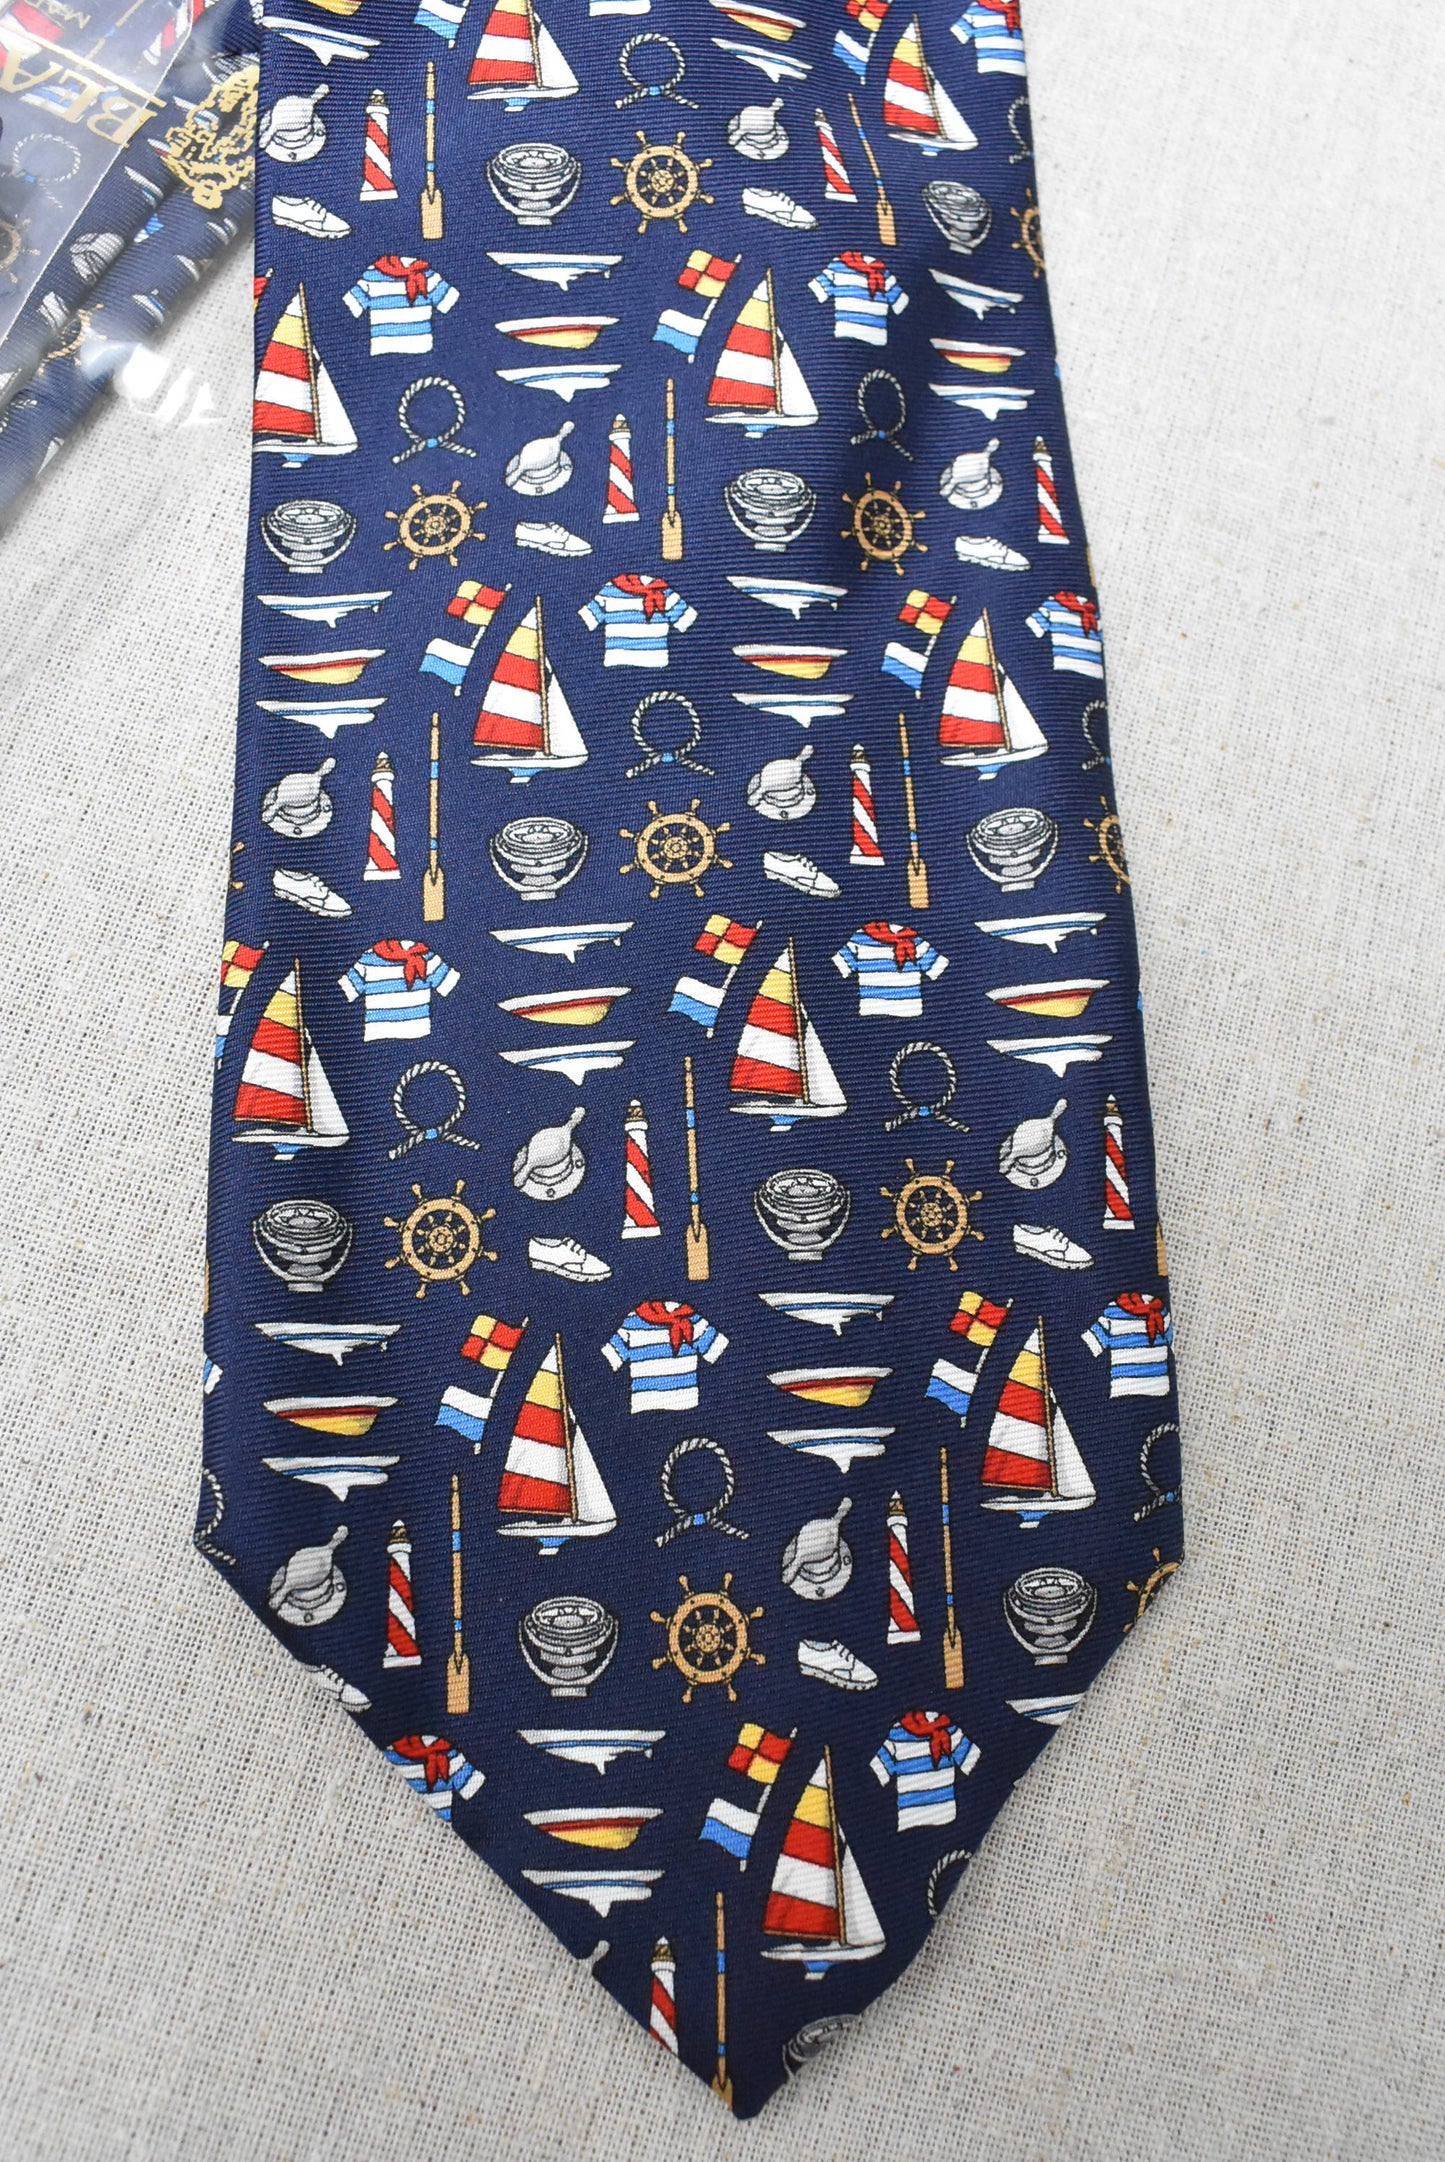 Beaufort pure silk nautical themed tie, NWT